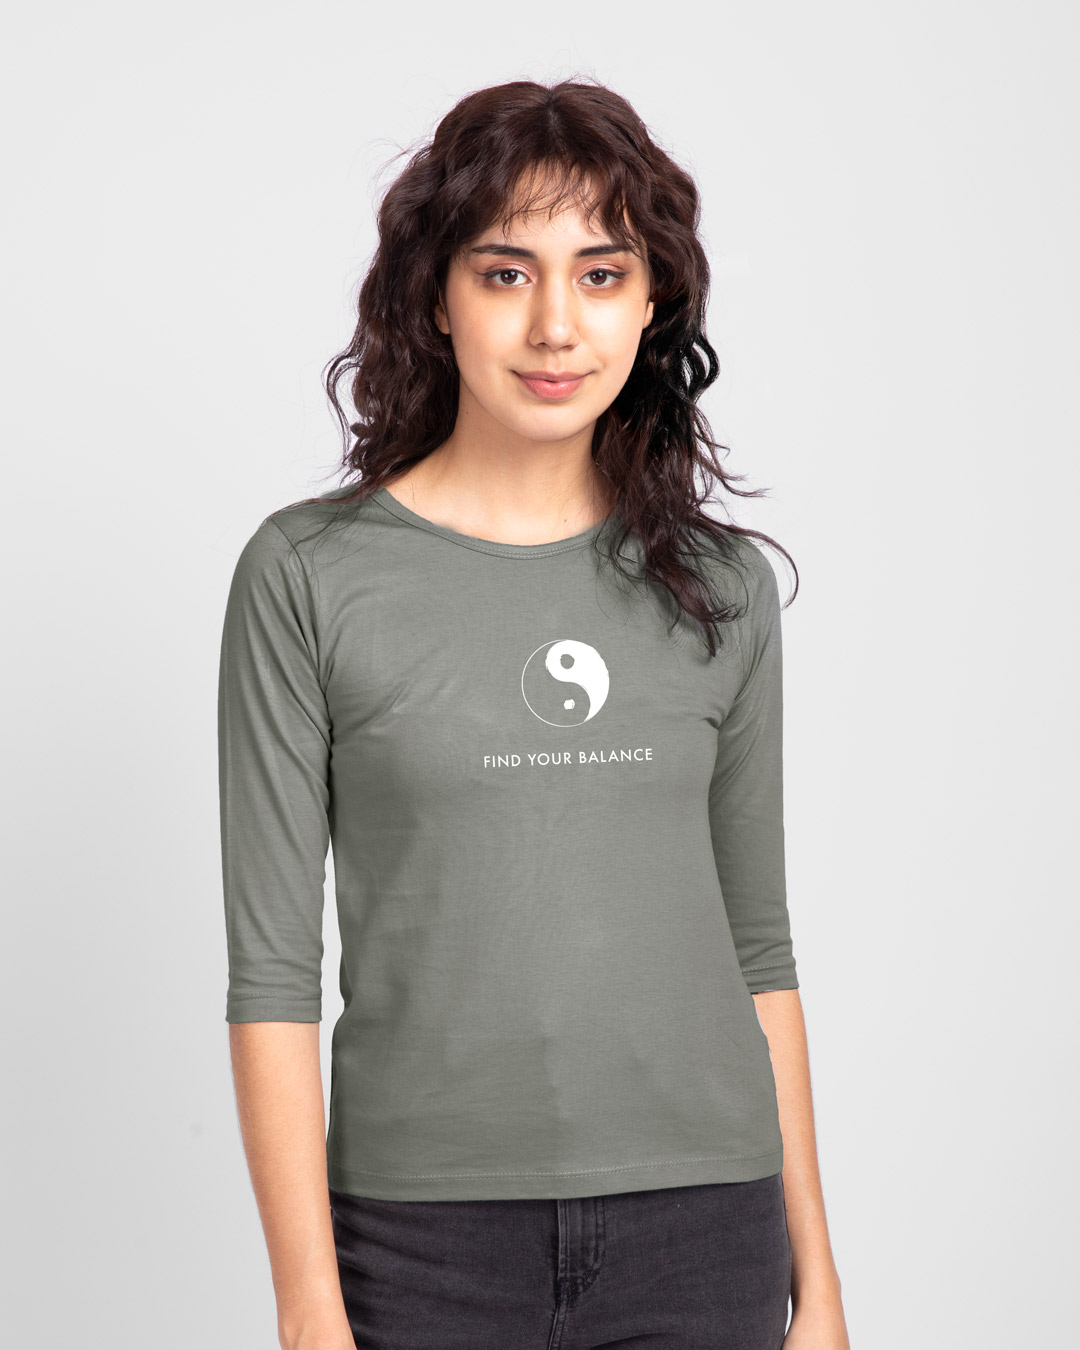 Buy Find Your Balance Round Neck 3/4th Sleeve T-Shirt Online at Bewakoof